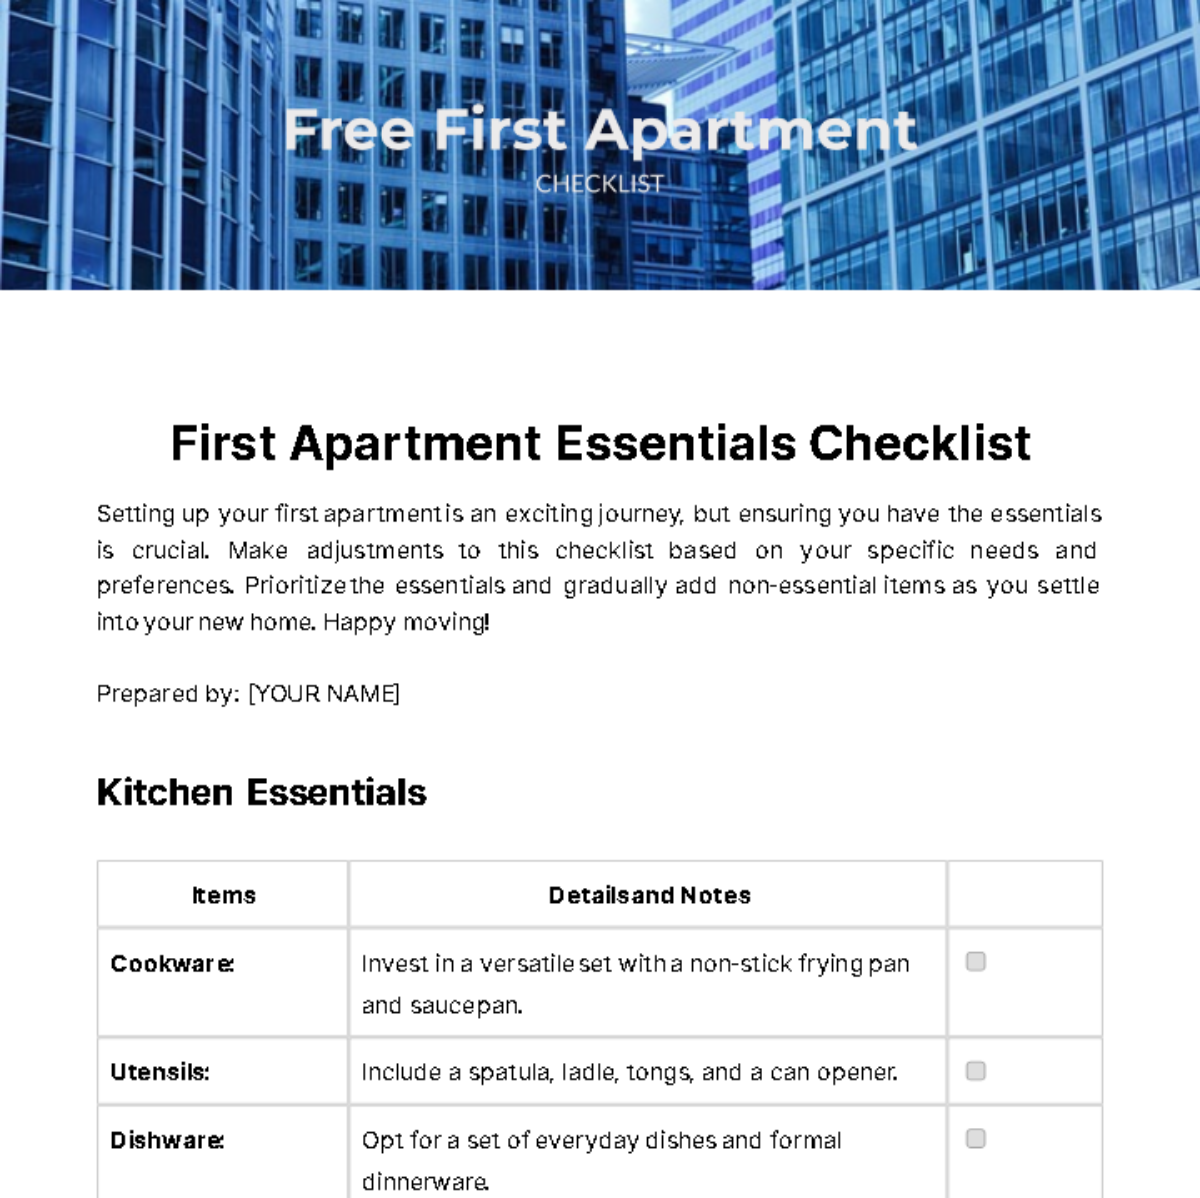 First Apartment Checklist Template